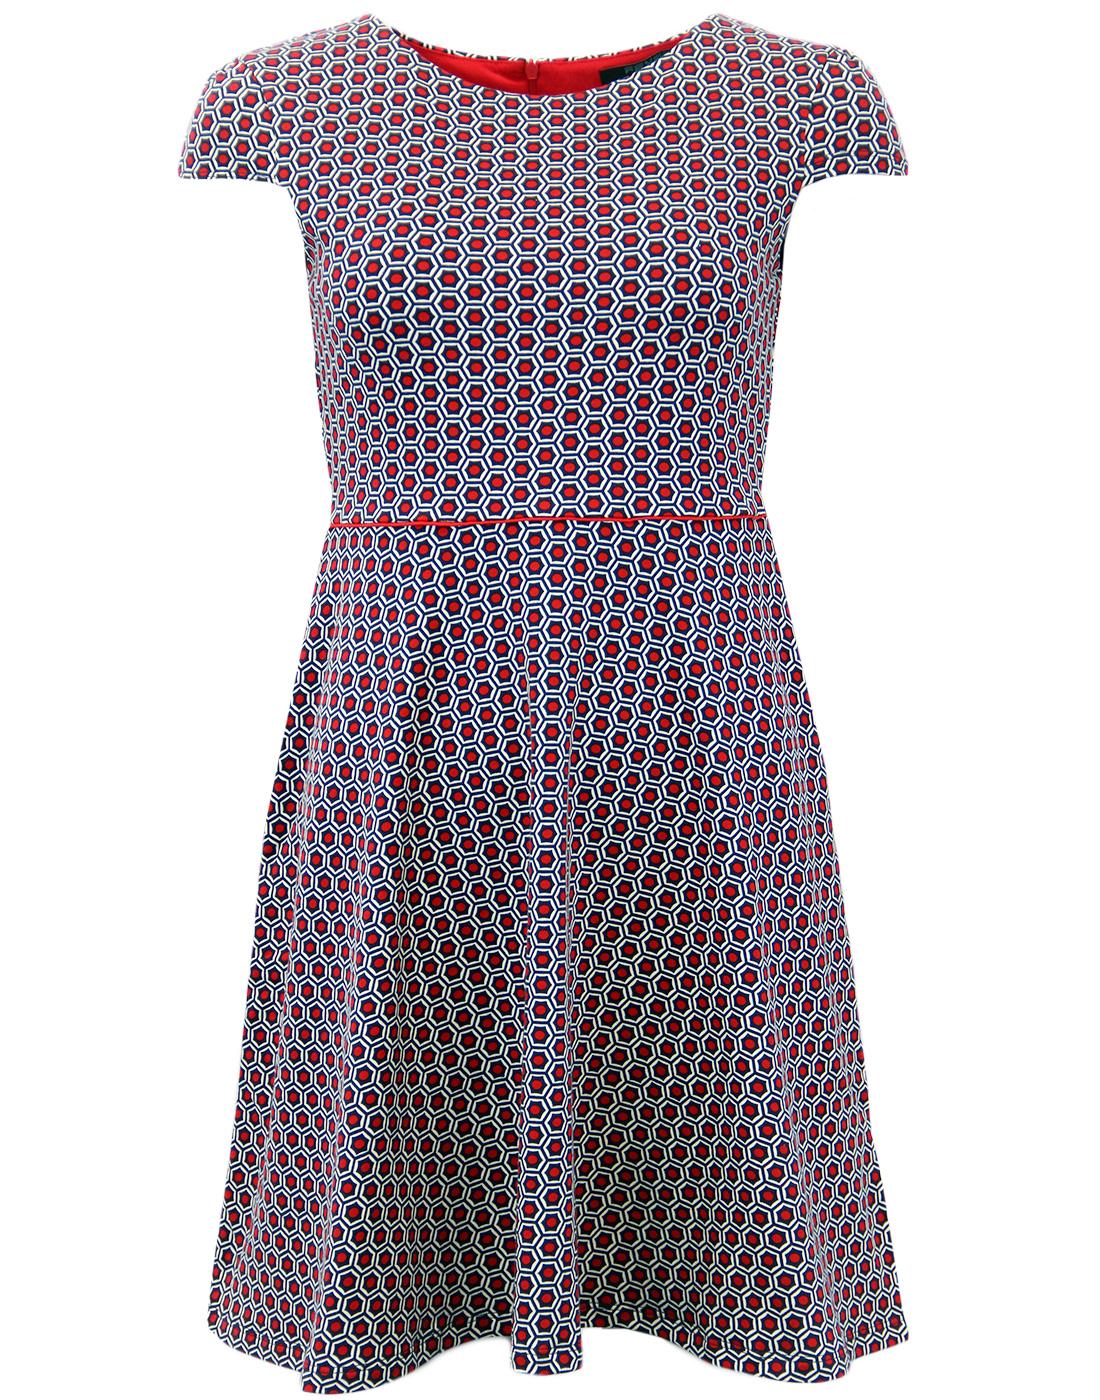 FEVER Patti Retro Sixties Geometric Flared Dress in Navy